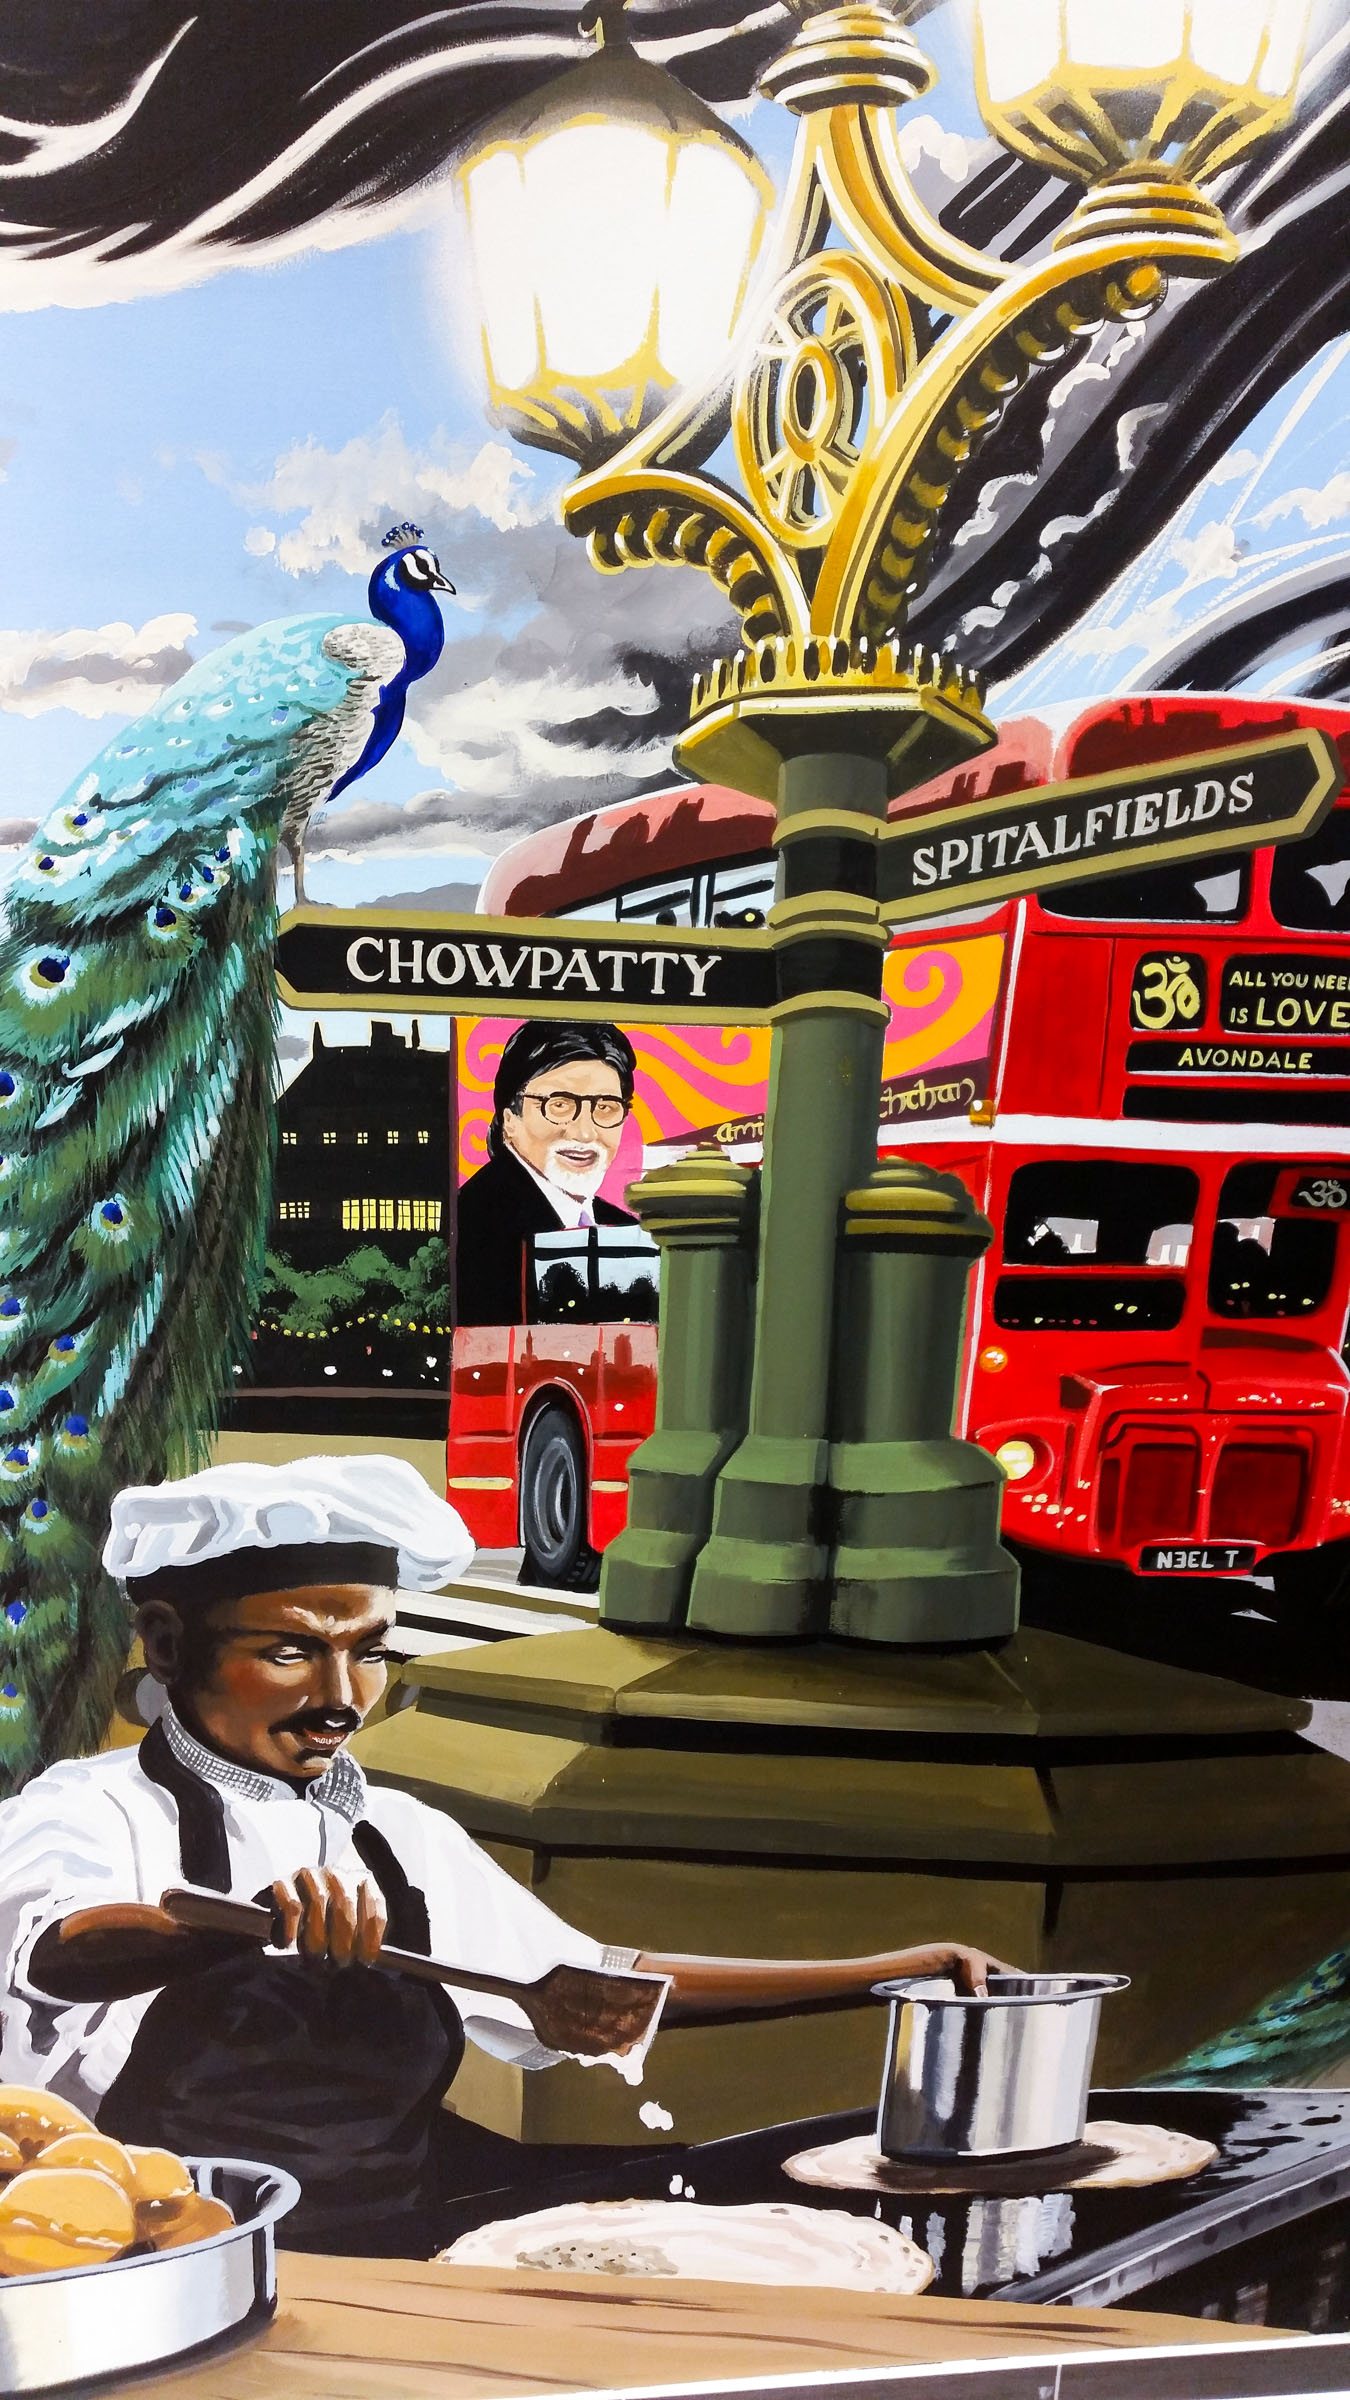 Peacock, bus, street vendor, glowing Westminster Bridge street light mural, and Amitabh Bachchan!